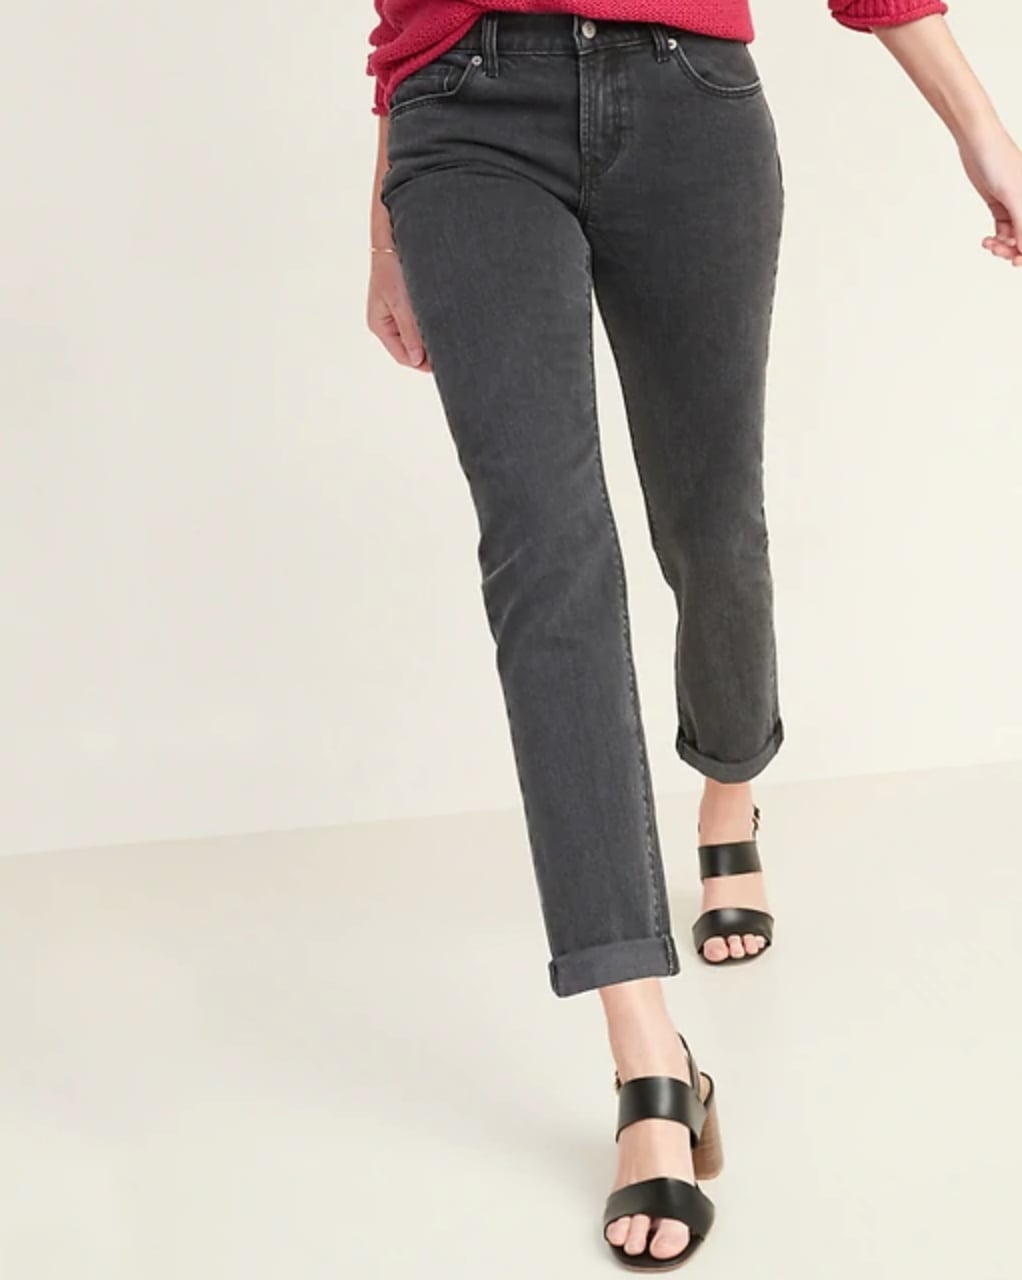 women's mid rise black jeans